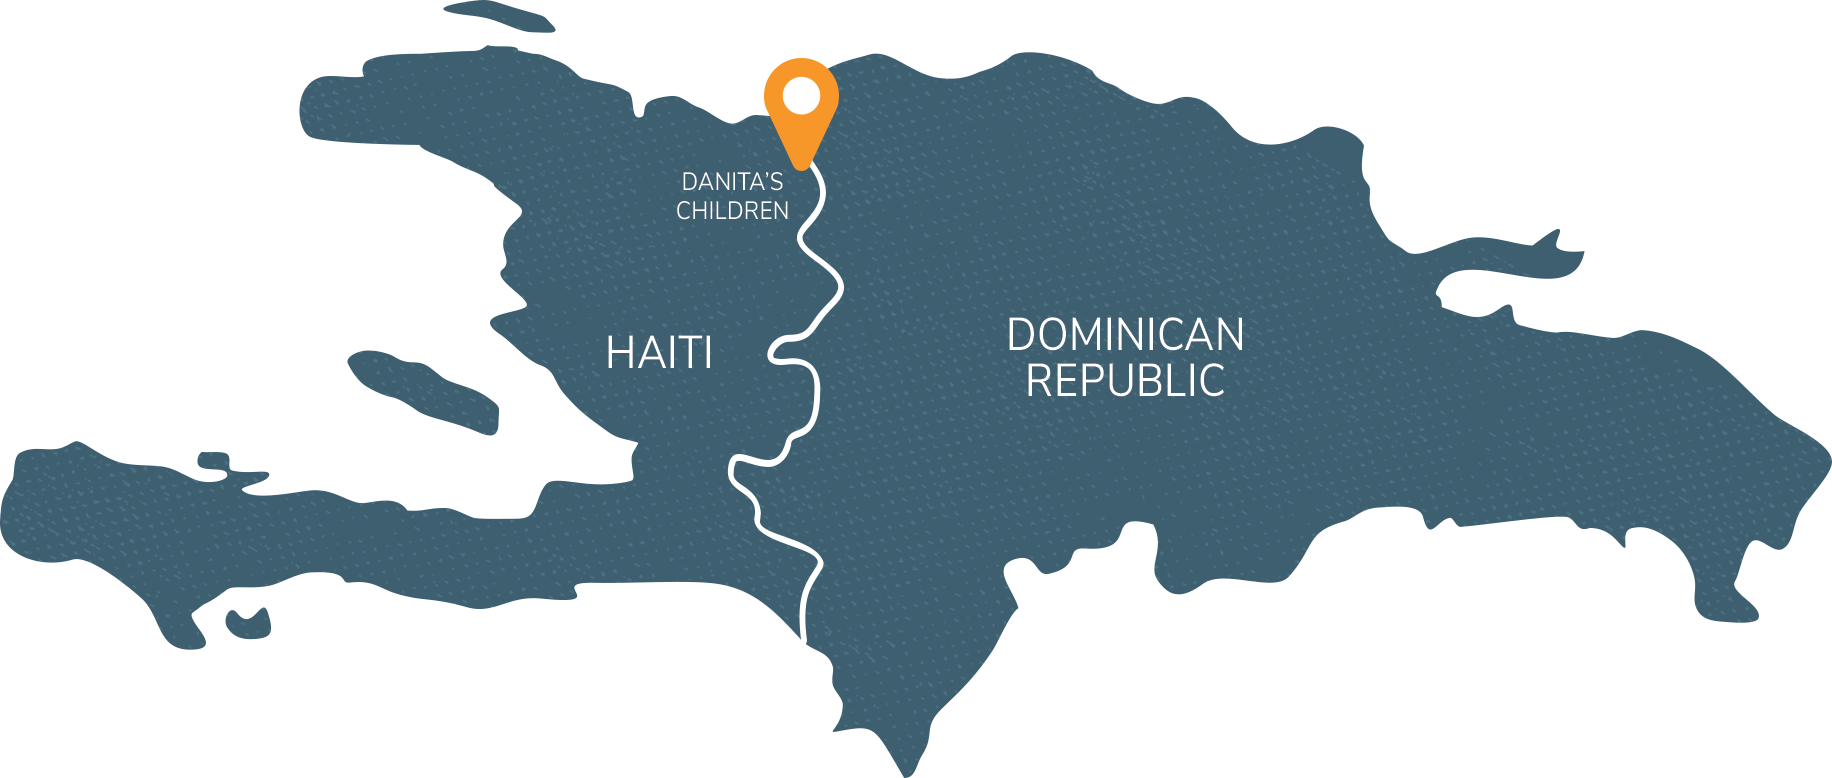 Haitiand Dominican Republic Mapwith Danitas Children Location PNG